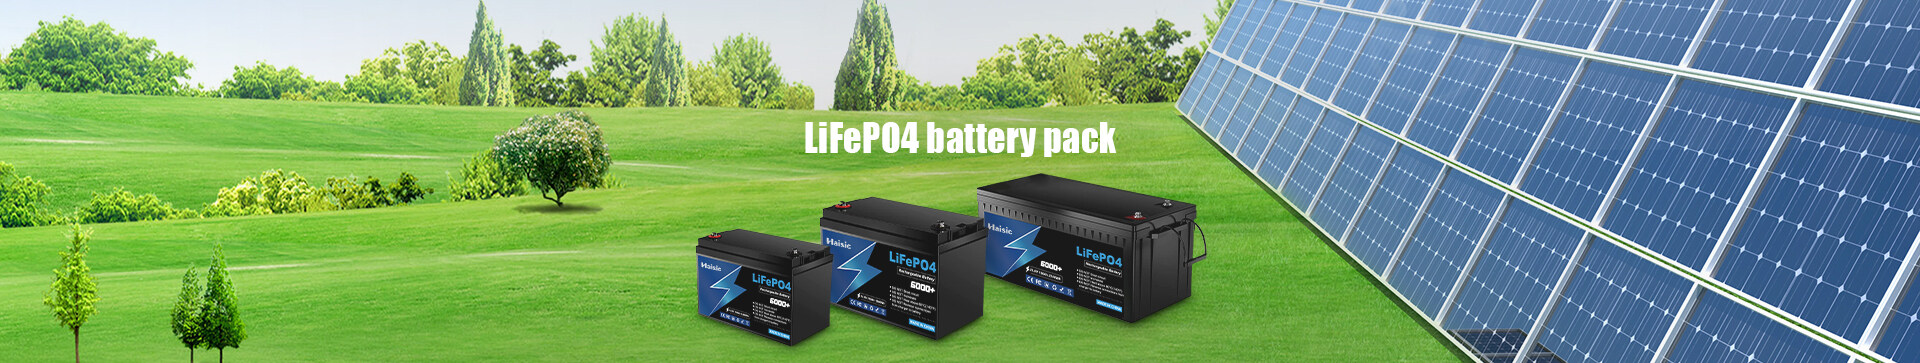 odm lifepo4 phosphate battery manufacturer, odm lifepo4 phosphate battery wholesale